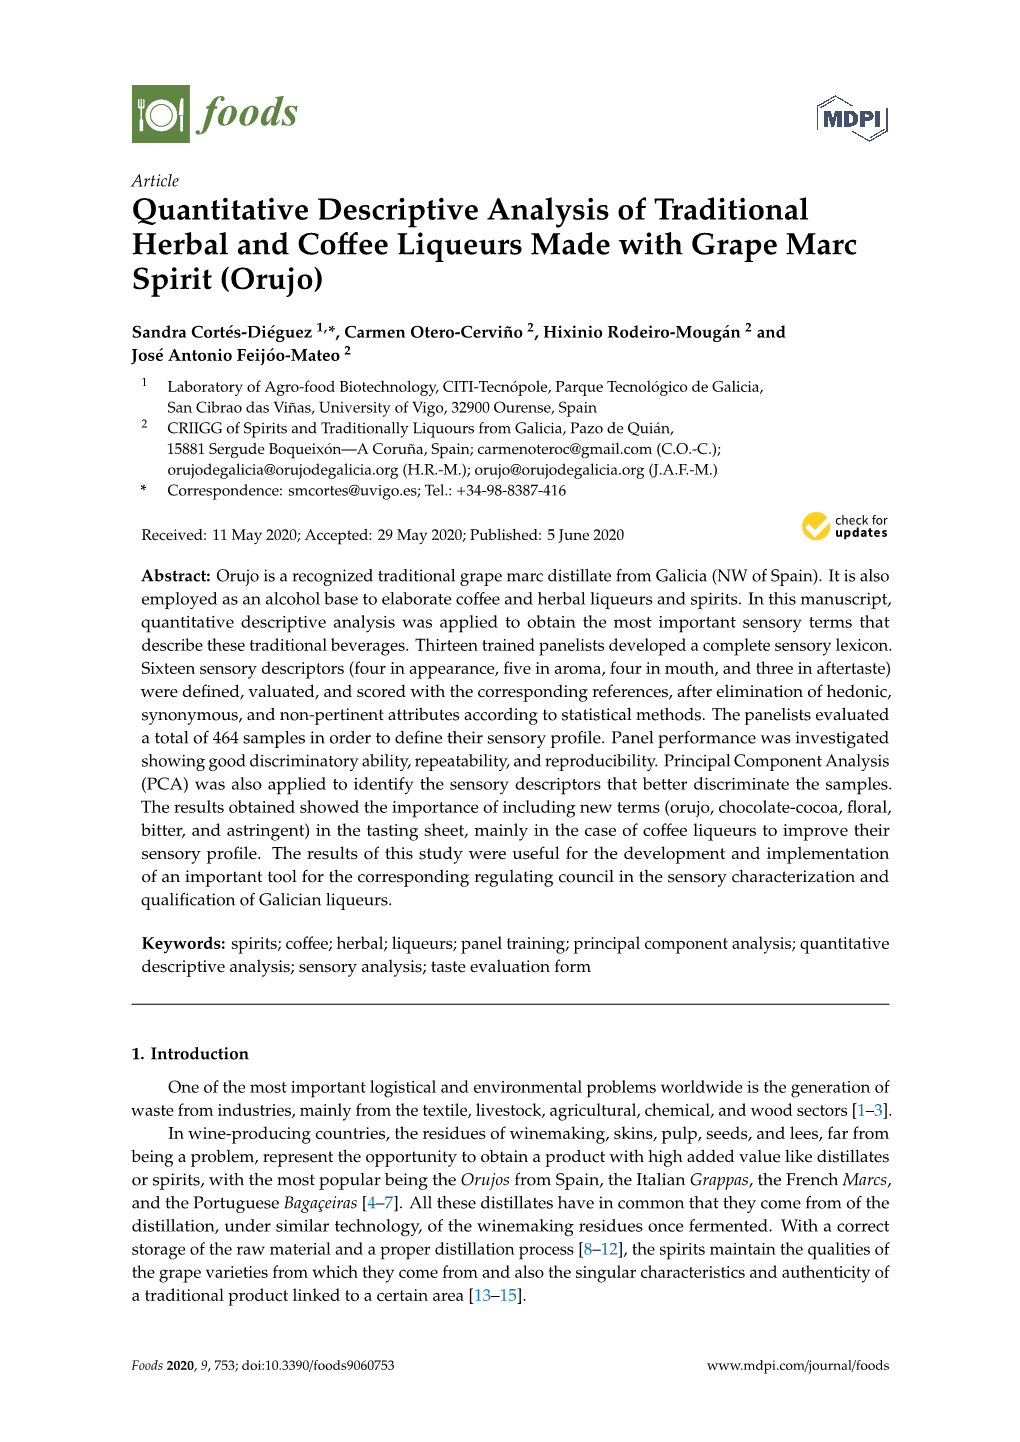 Quantitative Descriptive Analysis of Traditional Herbal and Coﬀee Liqueurs Made with Grape Marc Spirit (Orujo)